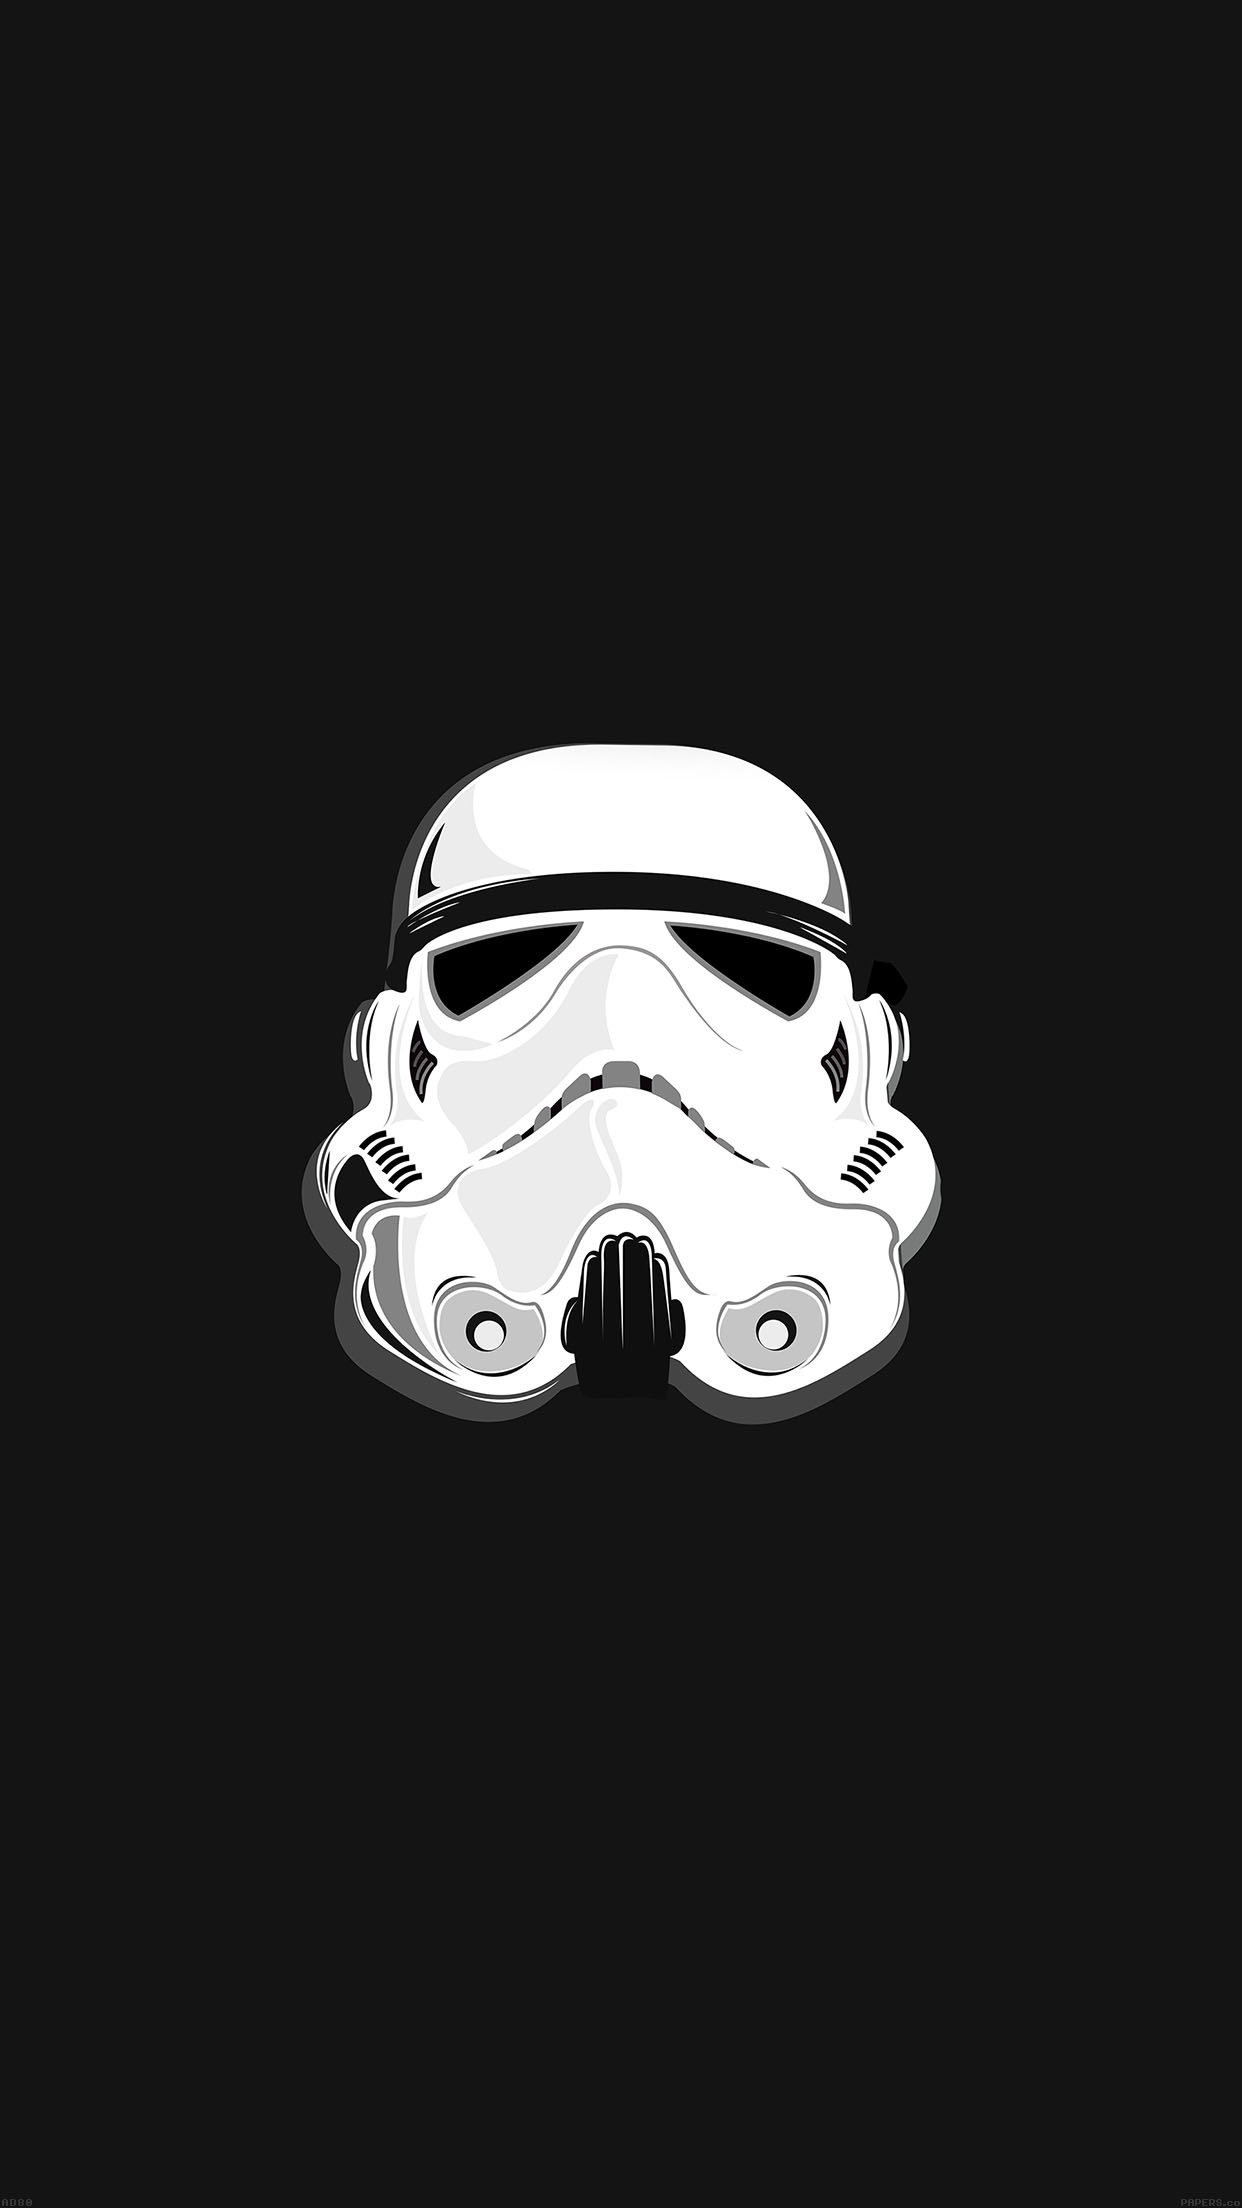 Download Star Wars Stormtrooper Illustration iPhone 6 Plus HD Wallpaper